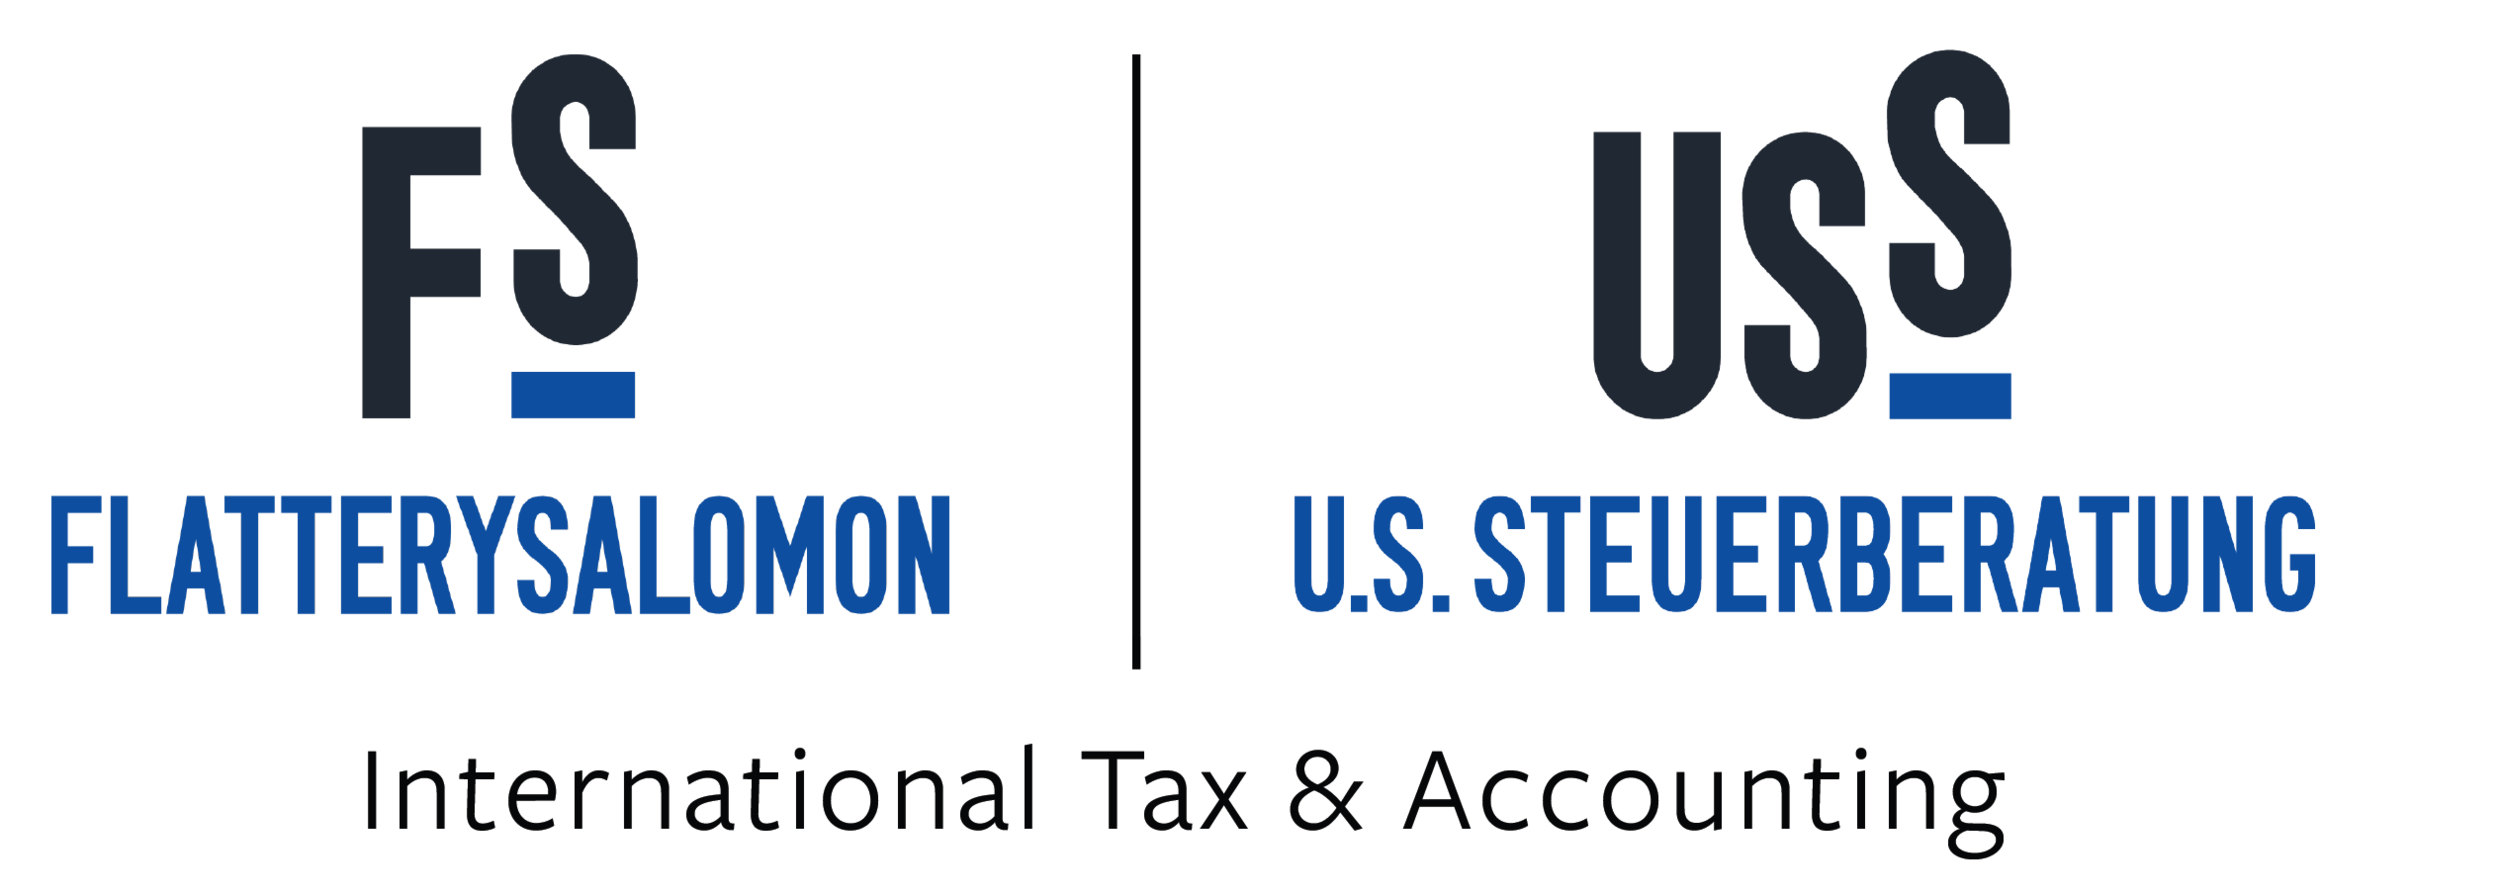 FlatterySalomon LLC | U.S. Steuerberatung LLC